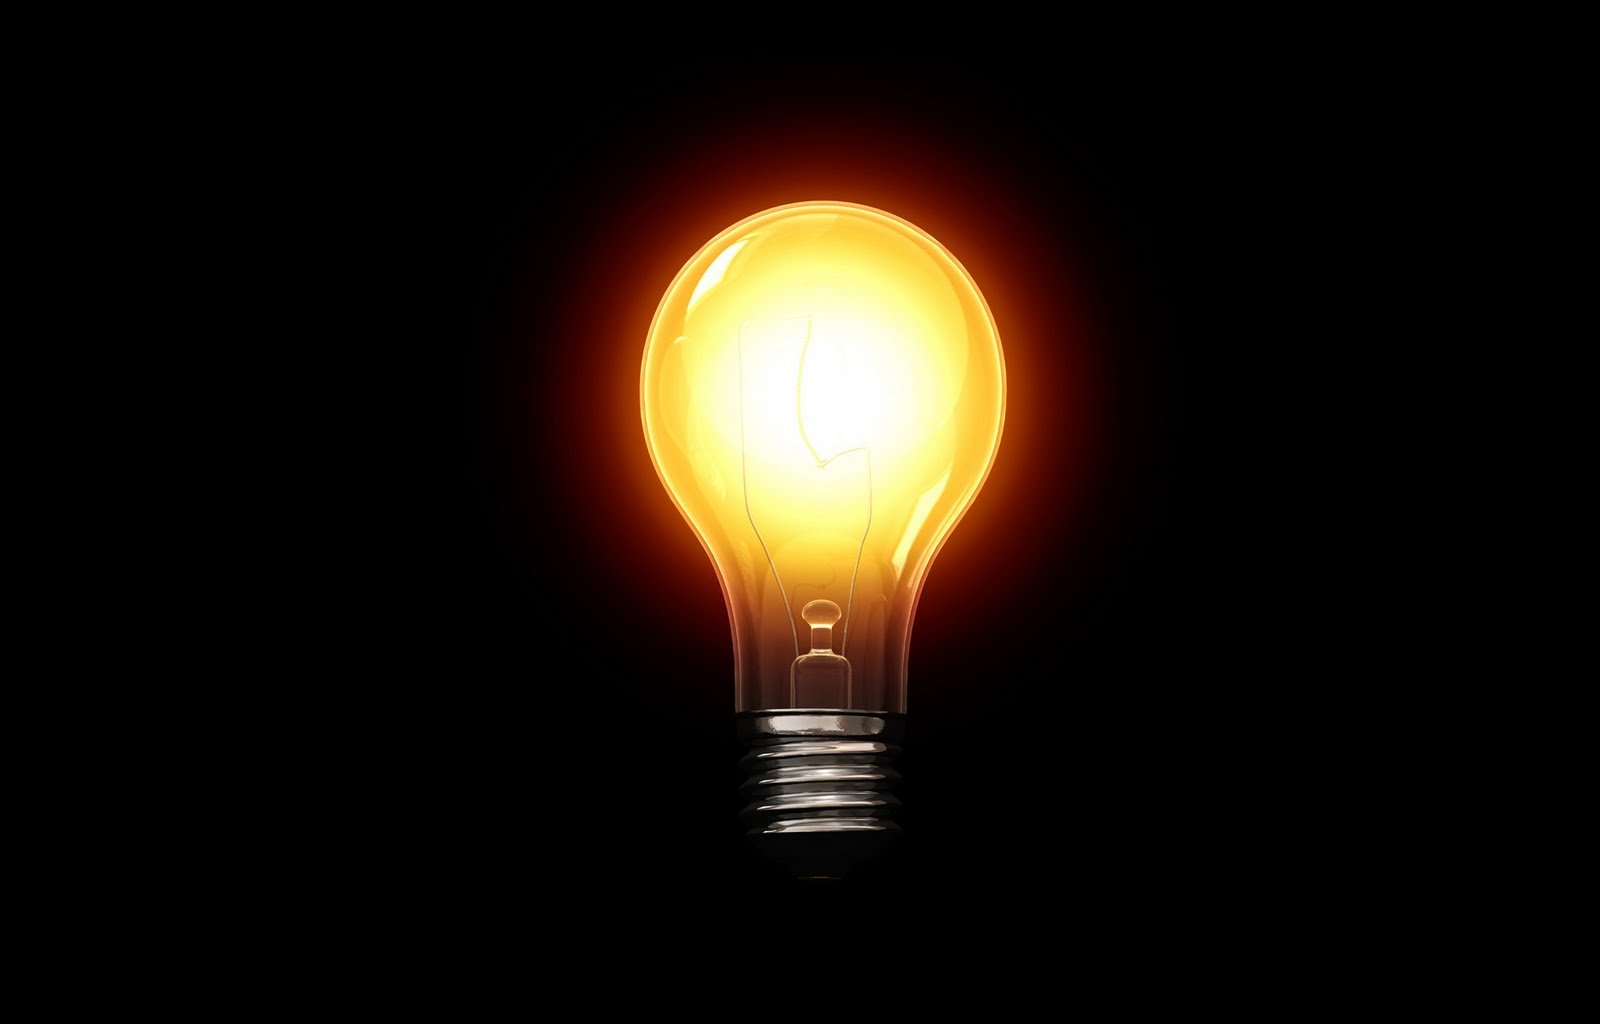 Lit up yellow-ish light bulb on a black background